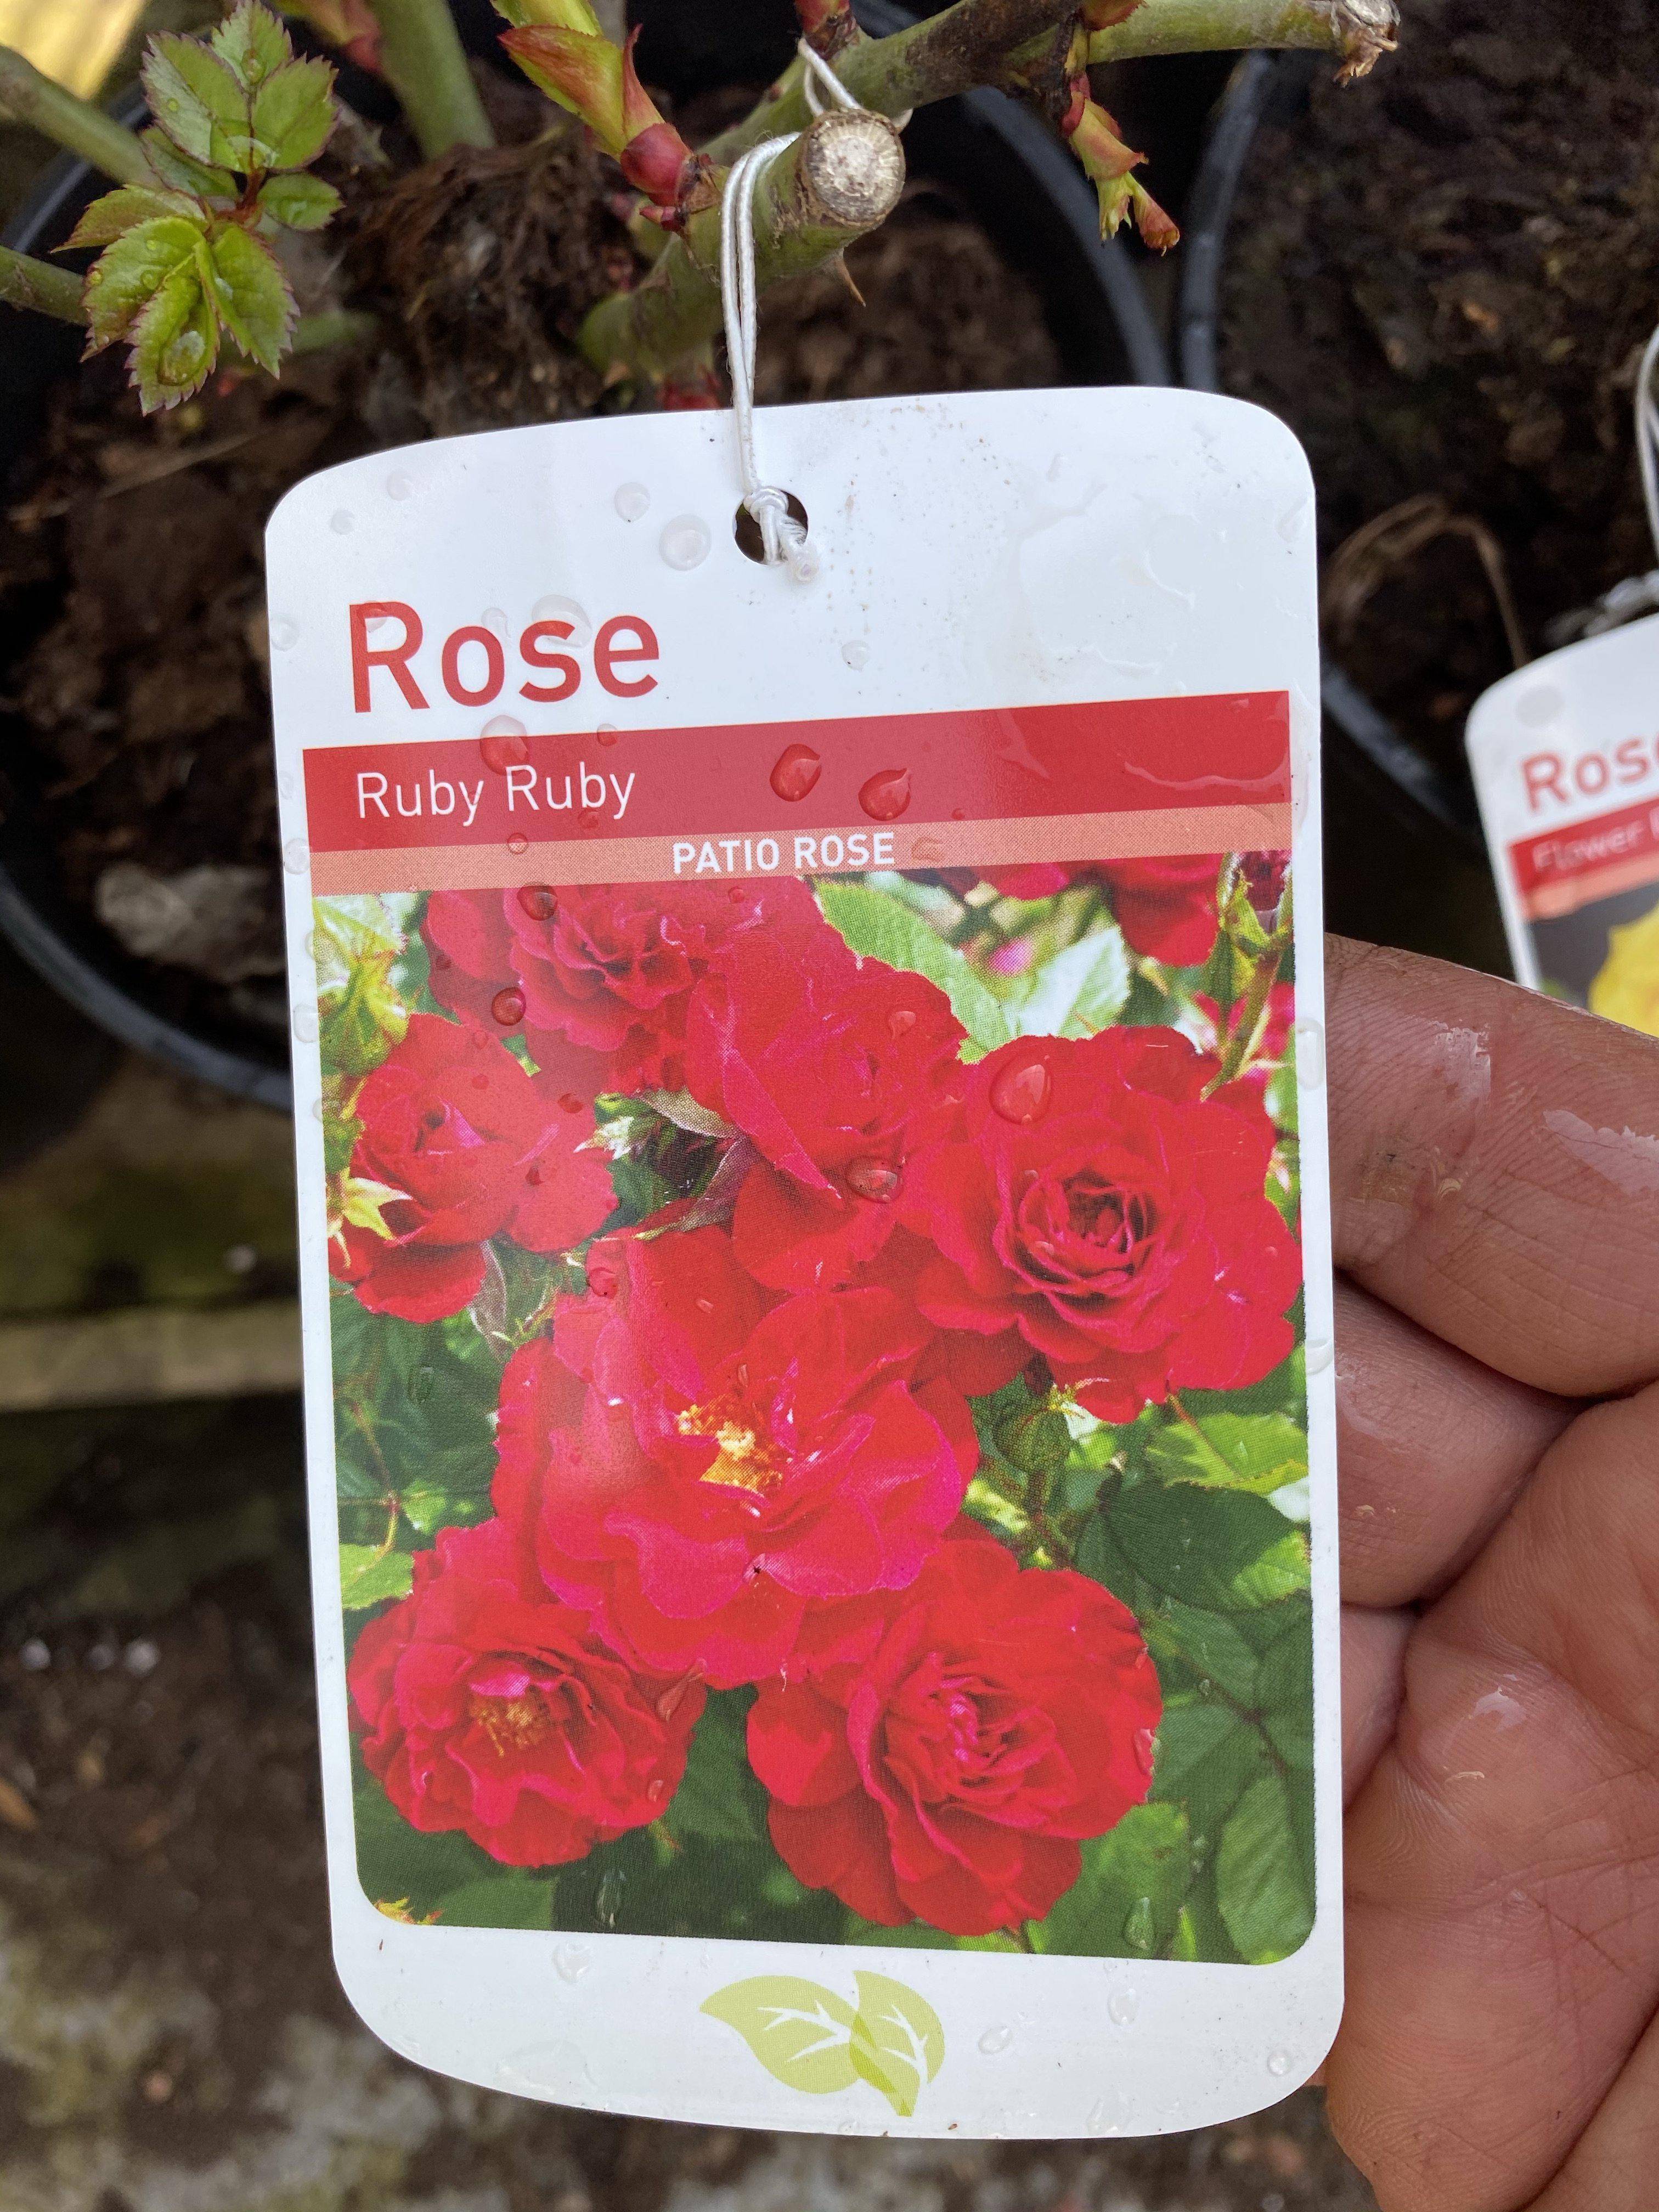 Rose “Ruby Ruby”